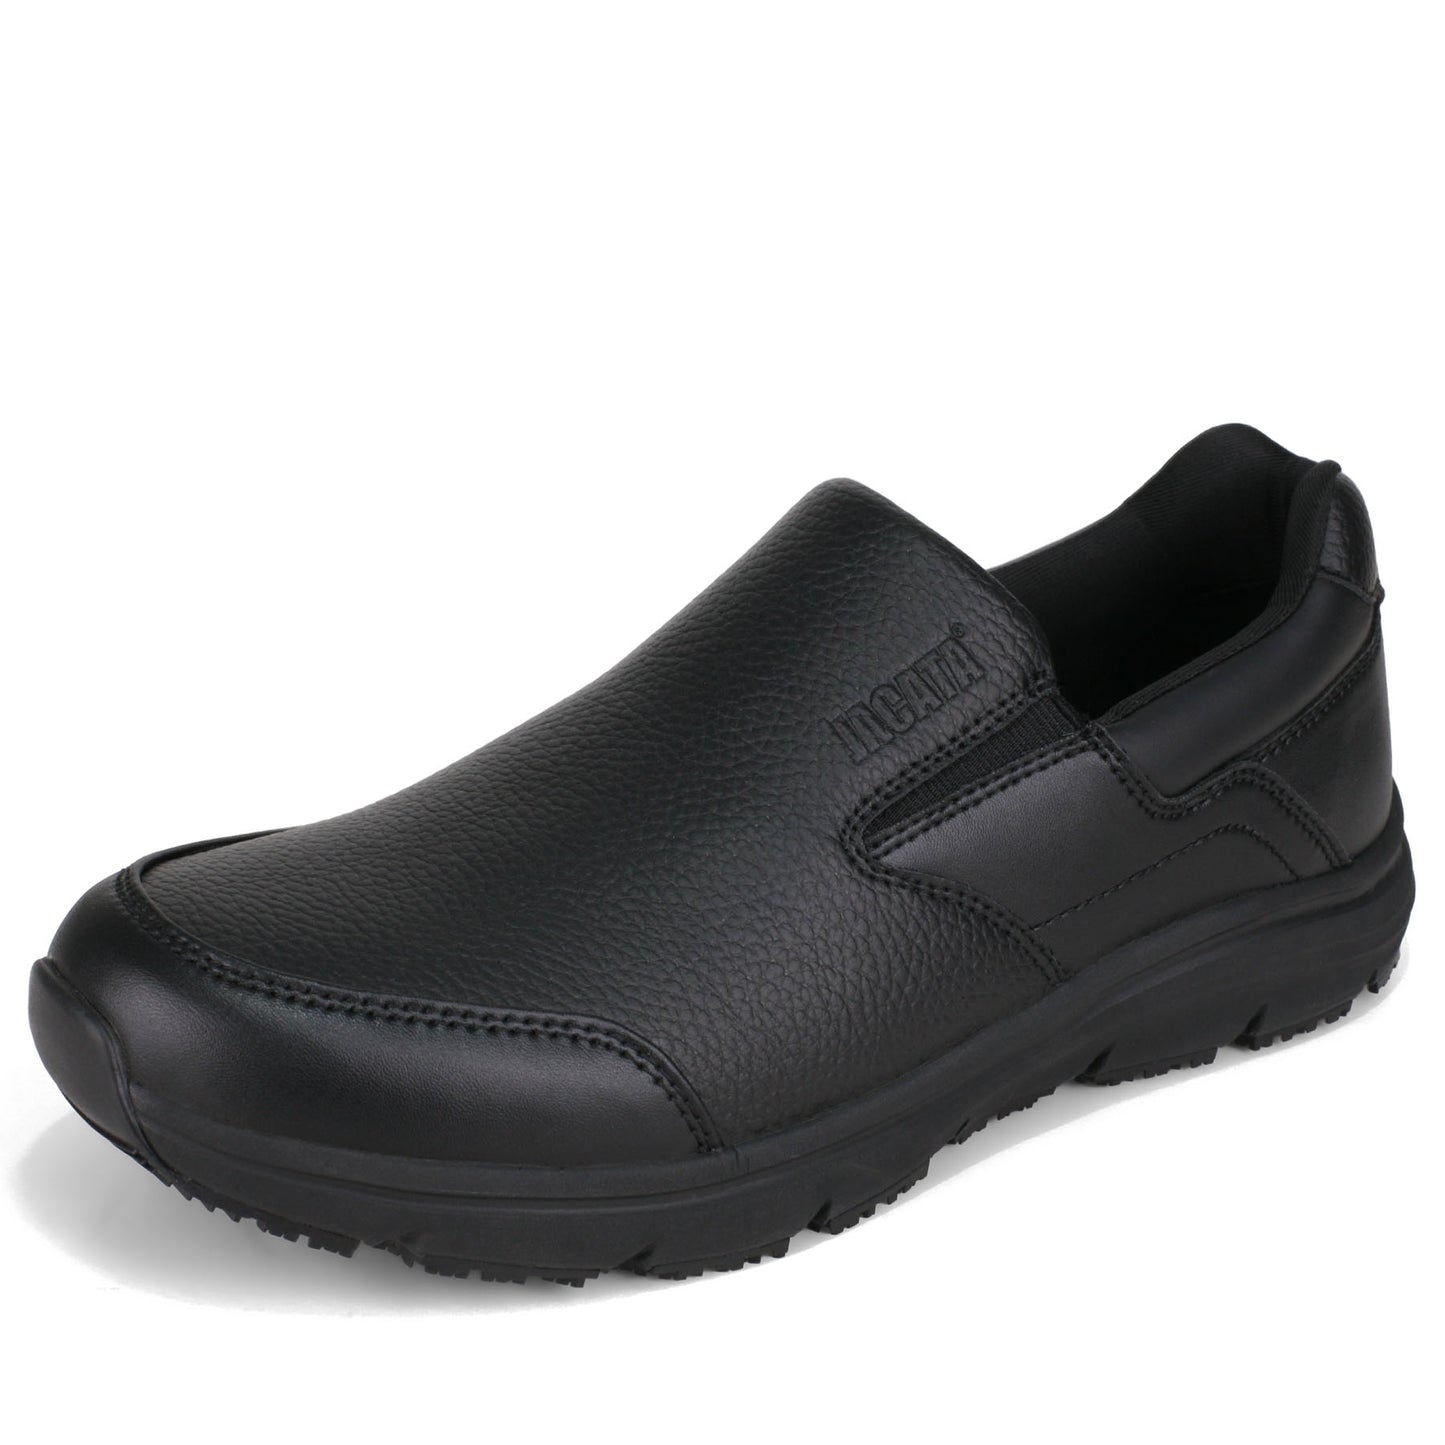 Men's Non Slip Black Work Shoes